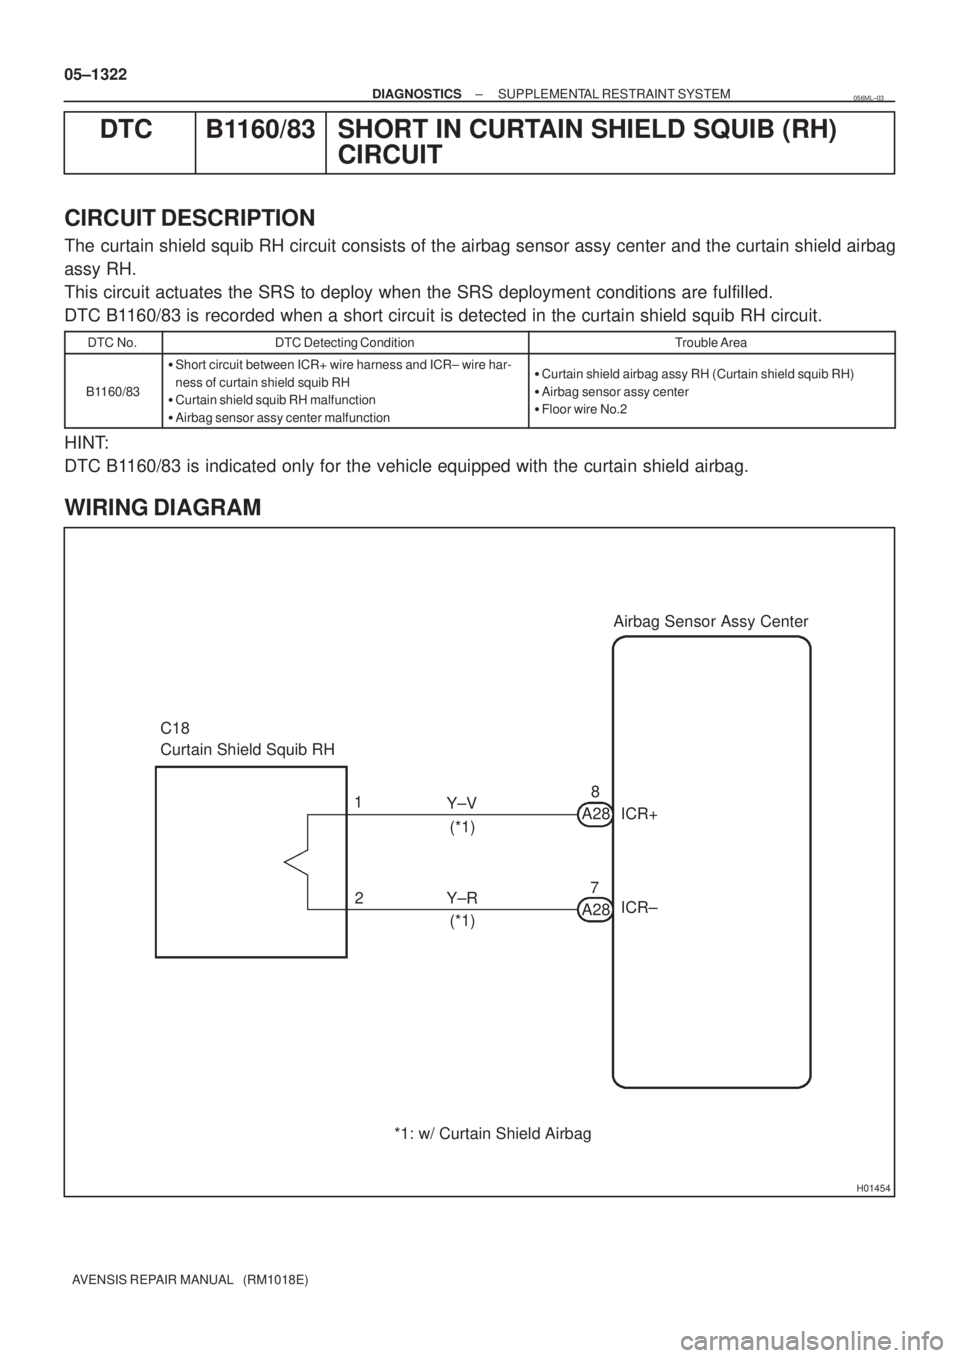 TOYOTA AVENSIS 2005  Service Repair Manual H01454
Airbag Sensor Assy Center
C18
Curtain Shield Squib RH
8
A28 ICR+ Y±V
7
A28ICR± Y±R 1
2(*1)
(*1)
*1: w/ Curtain Shield Airbag 05±1322
± DIAGNOSTICSSUPPLEMENTAL RESTRAINT SYSTEM
AVENSIS REPA